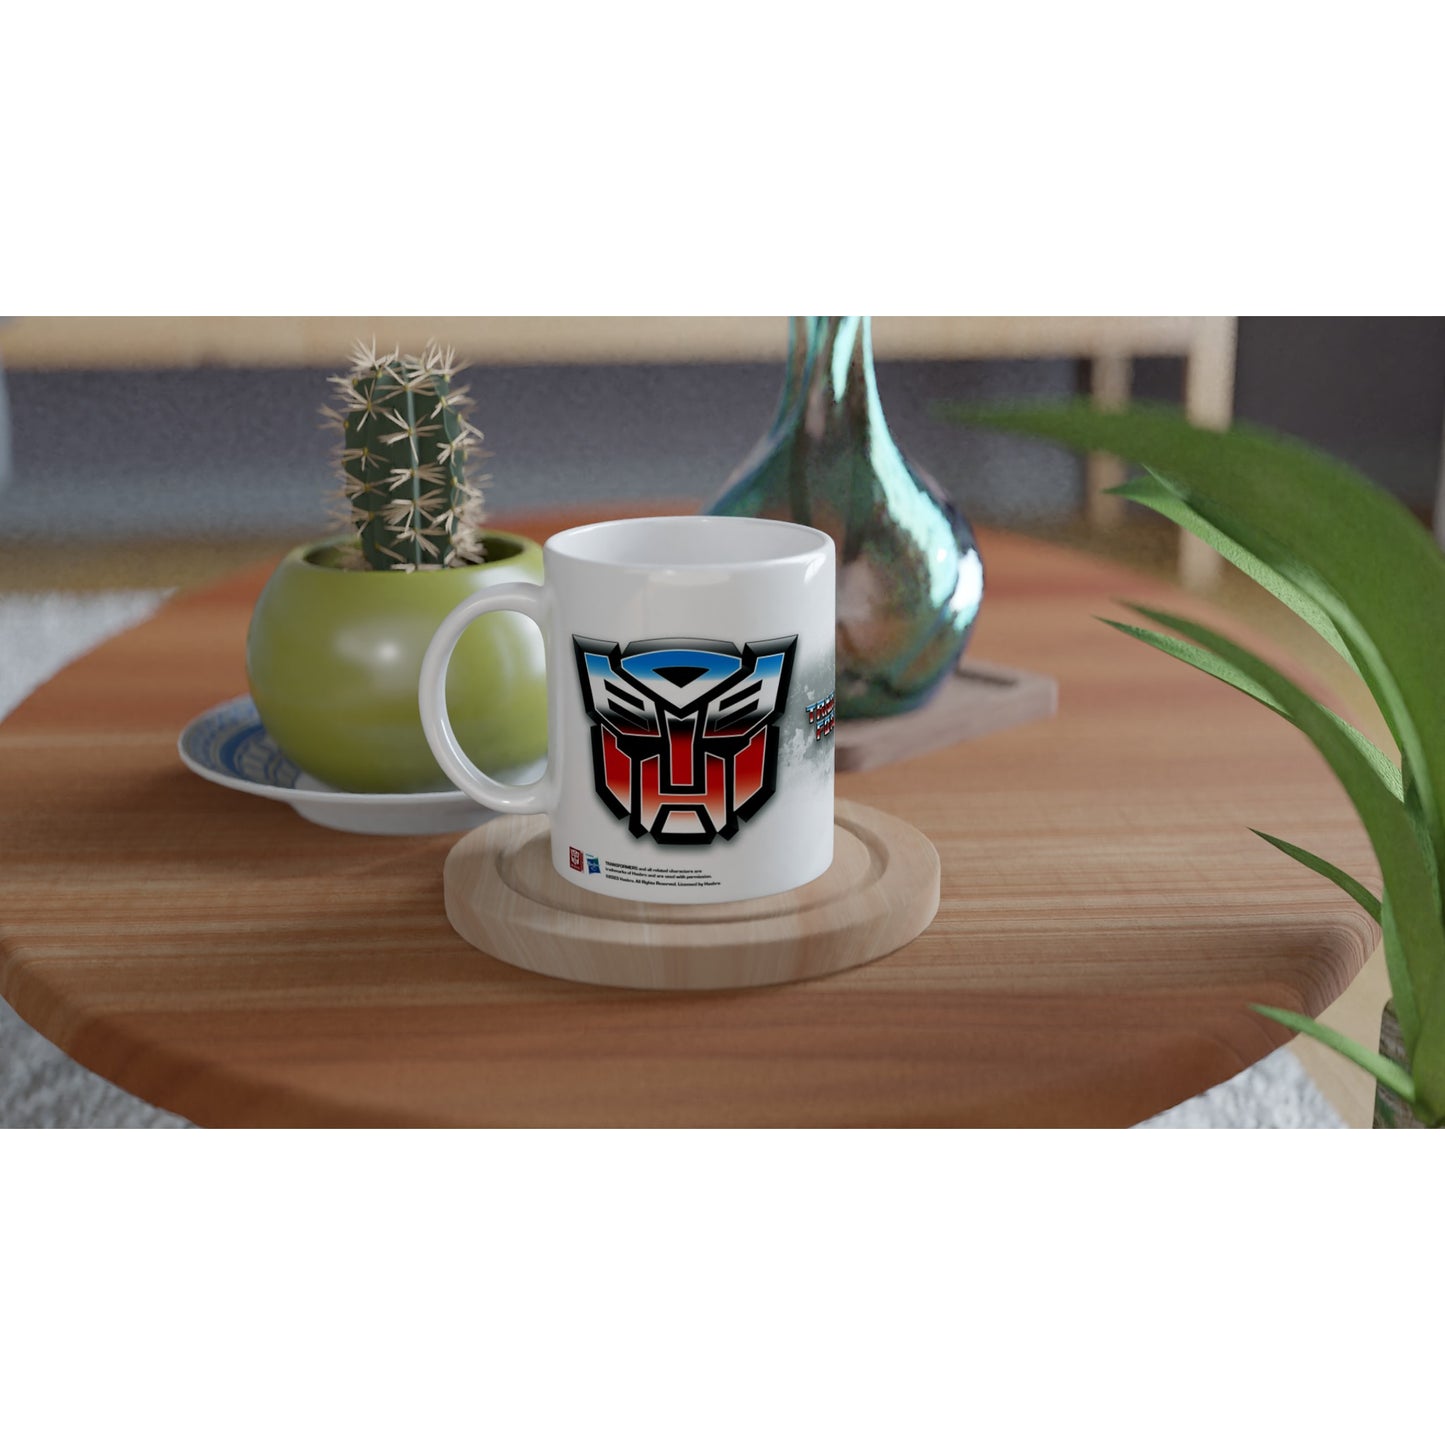 Official Transformers Mug - Autobots - 330ml White Mug